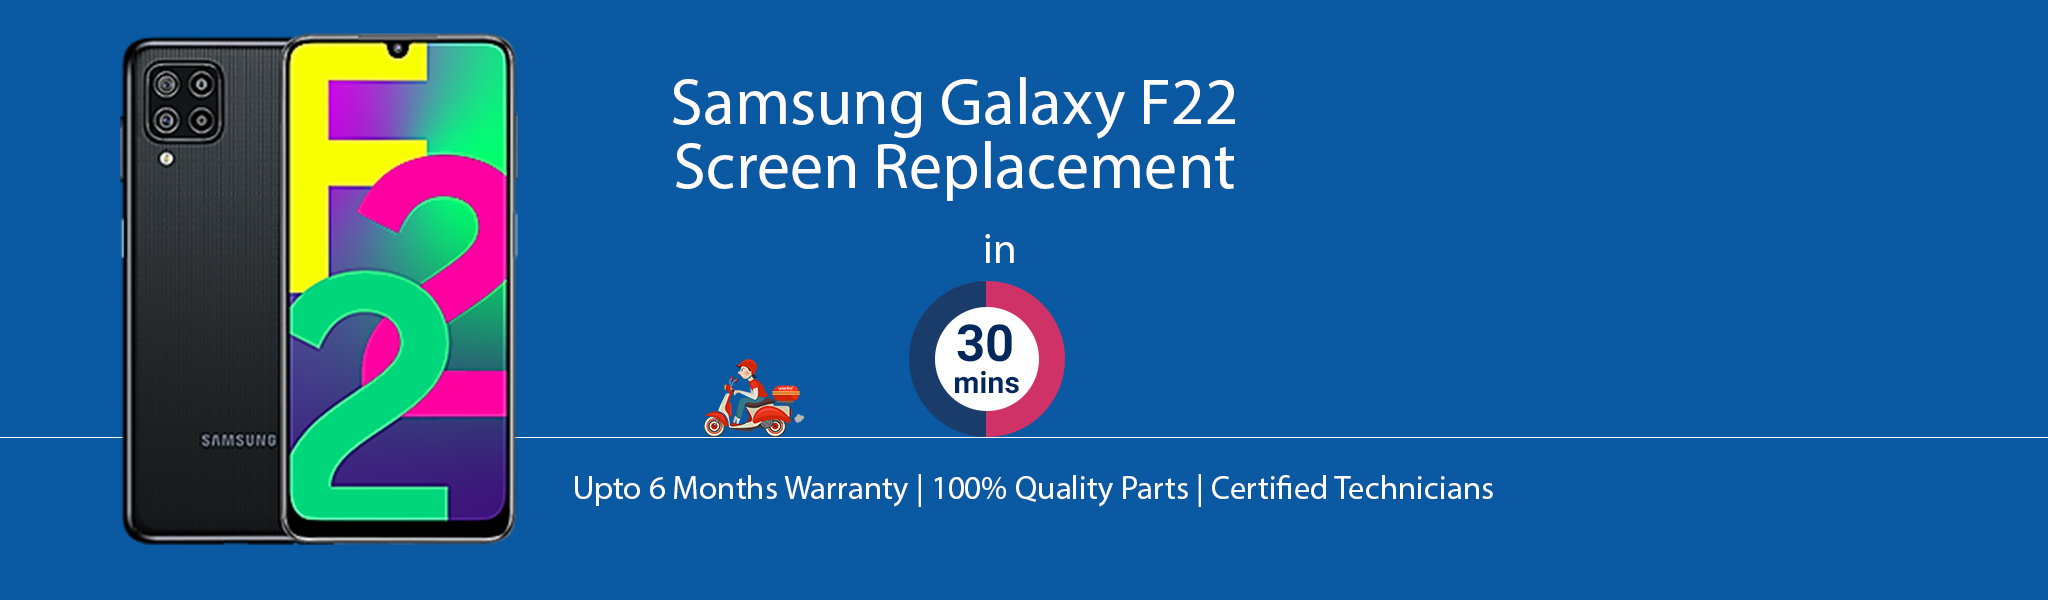 samsung-galaxy-f22-screen-replacement.jpg